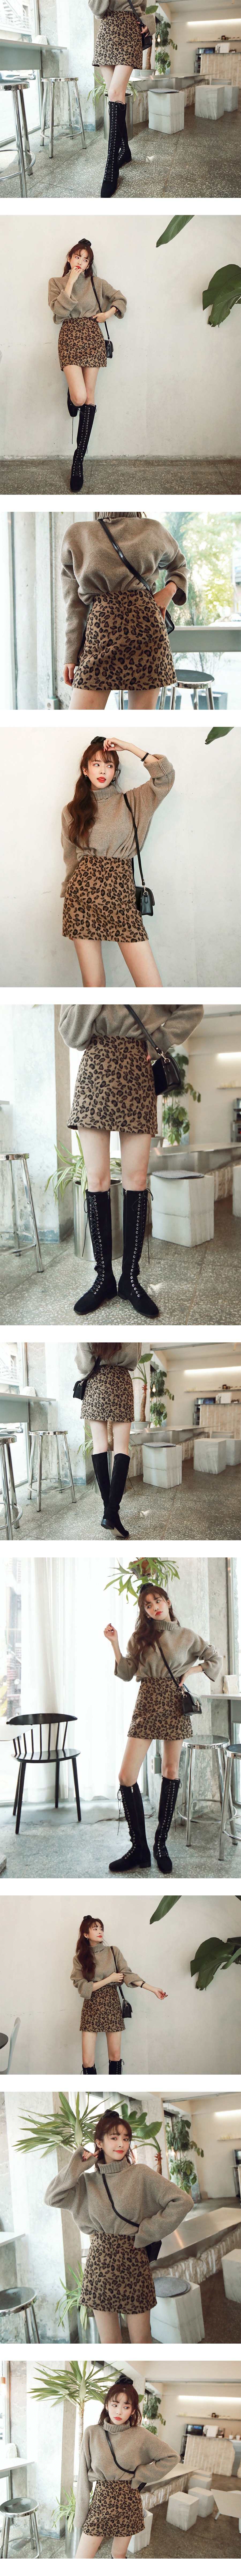 SSUMPART High Rise Leopard Mini Skirt #Brown S(25-26)